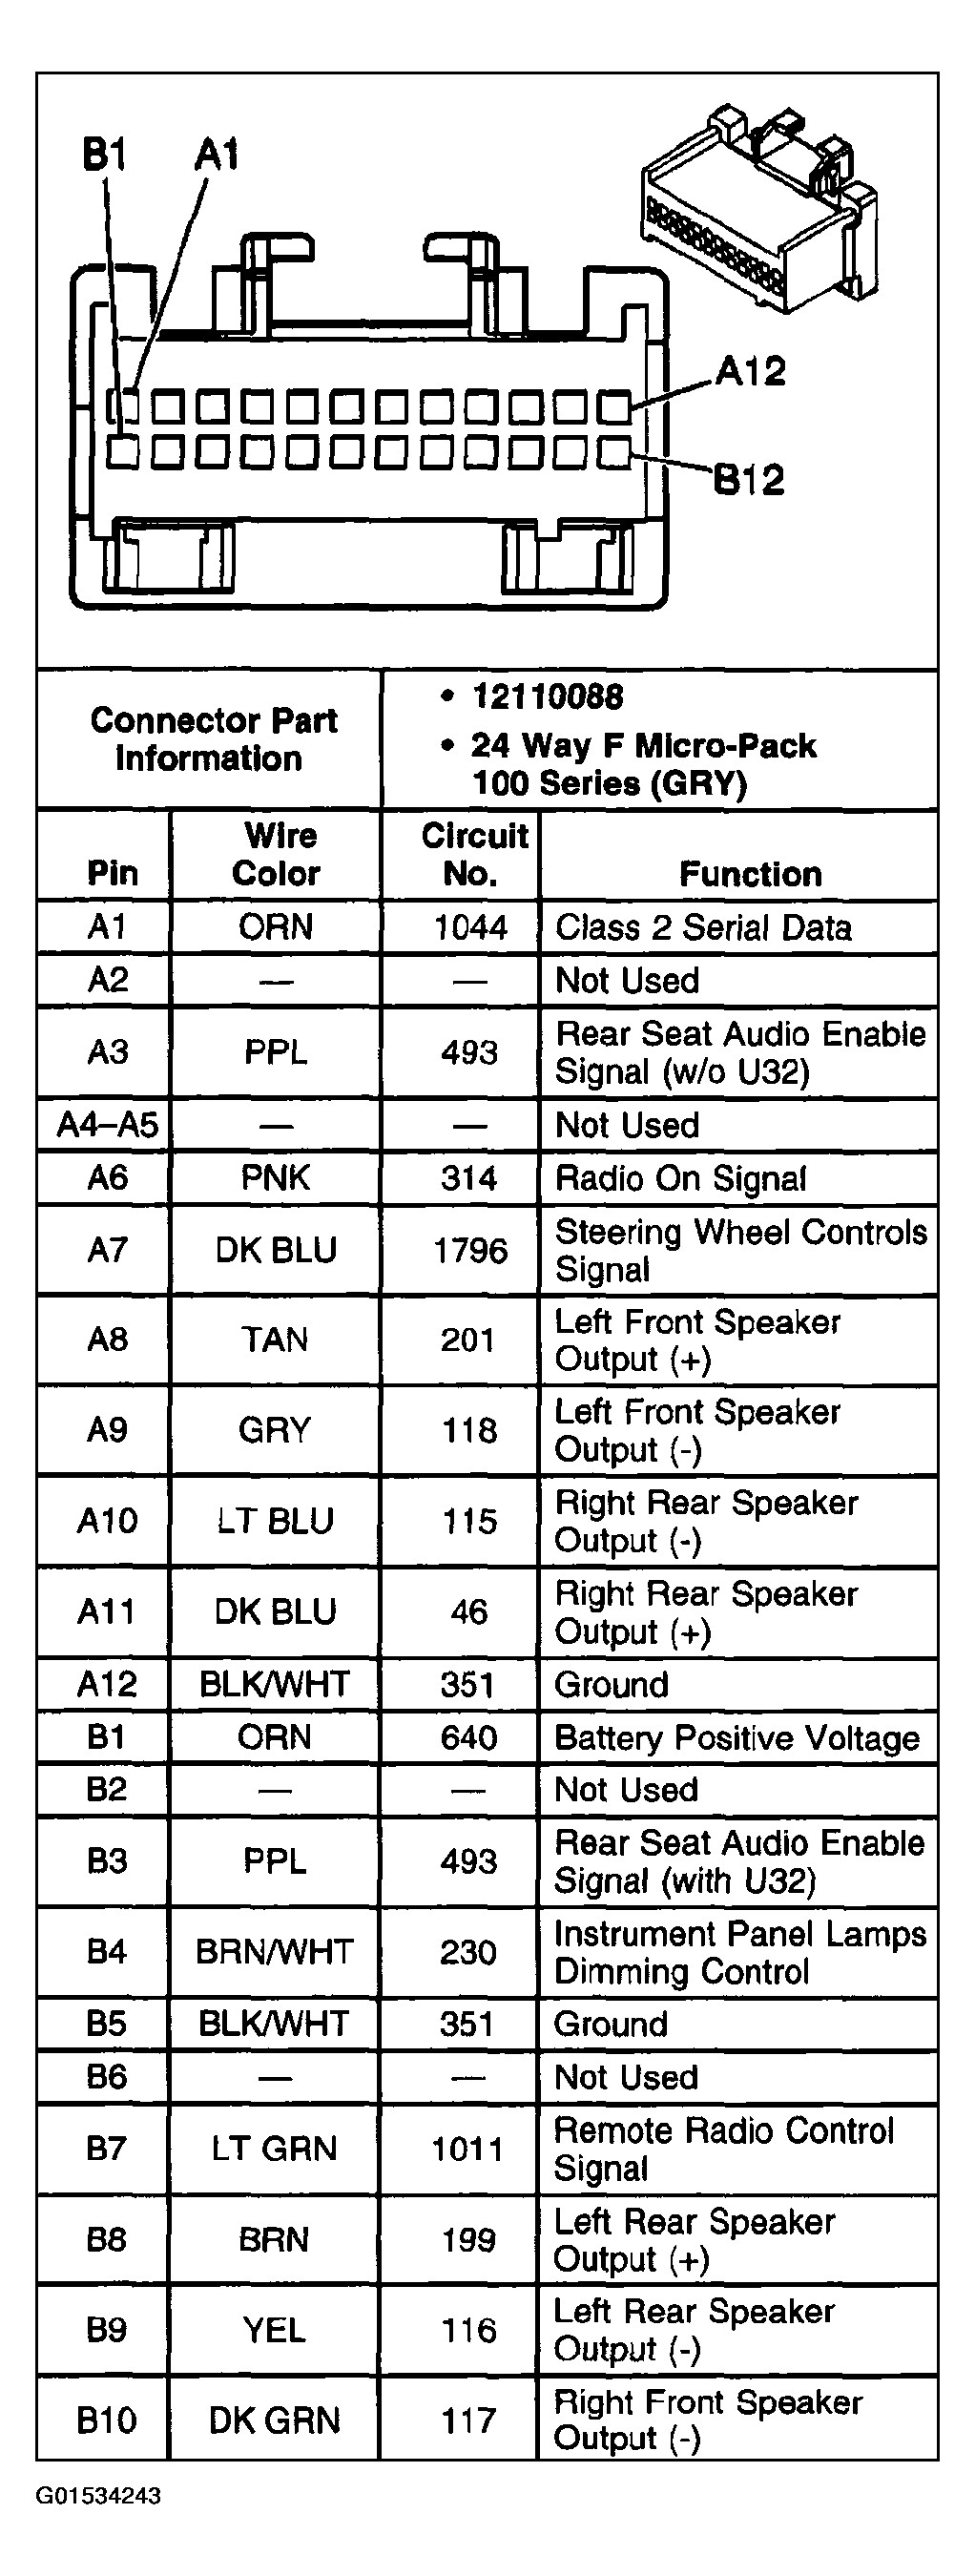 [DIAGRAM] 2006 Chevy Trailblazer Stereo Wiring Diagram FULL Version HD